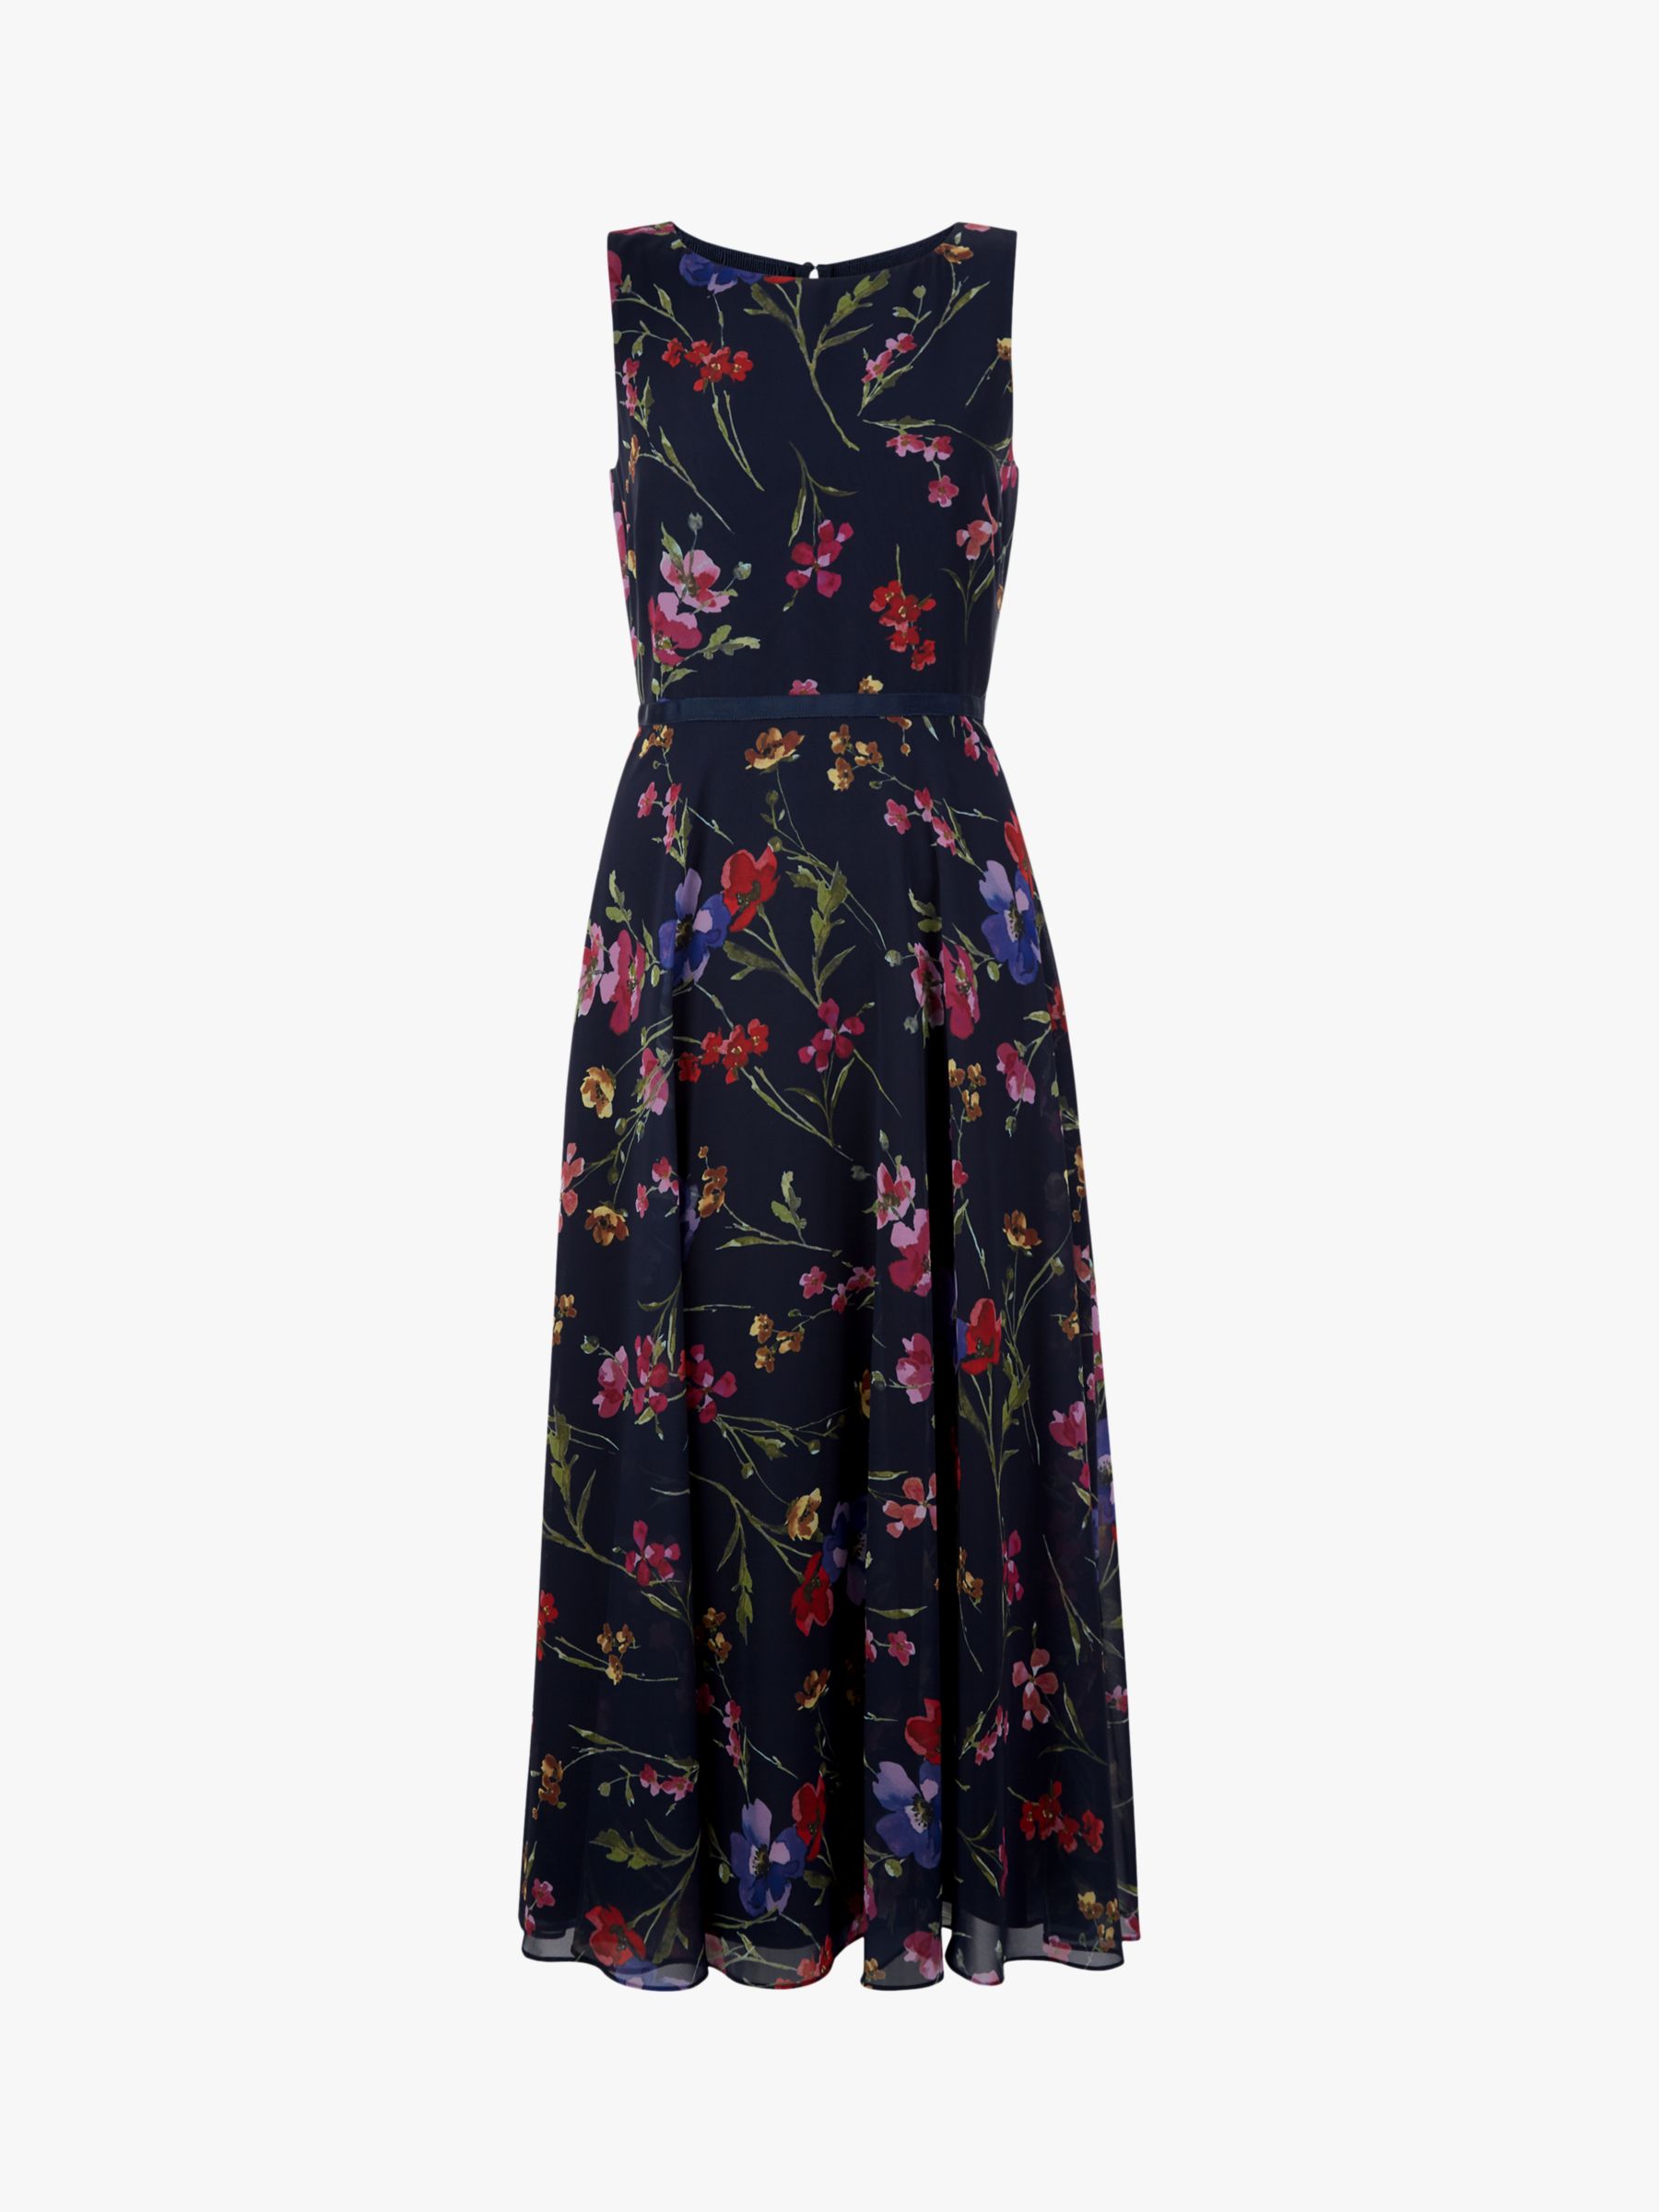 Hobbs Carly Floral Midi Dress, Navy/Multi, 6